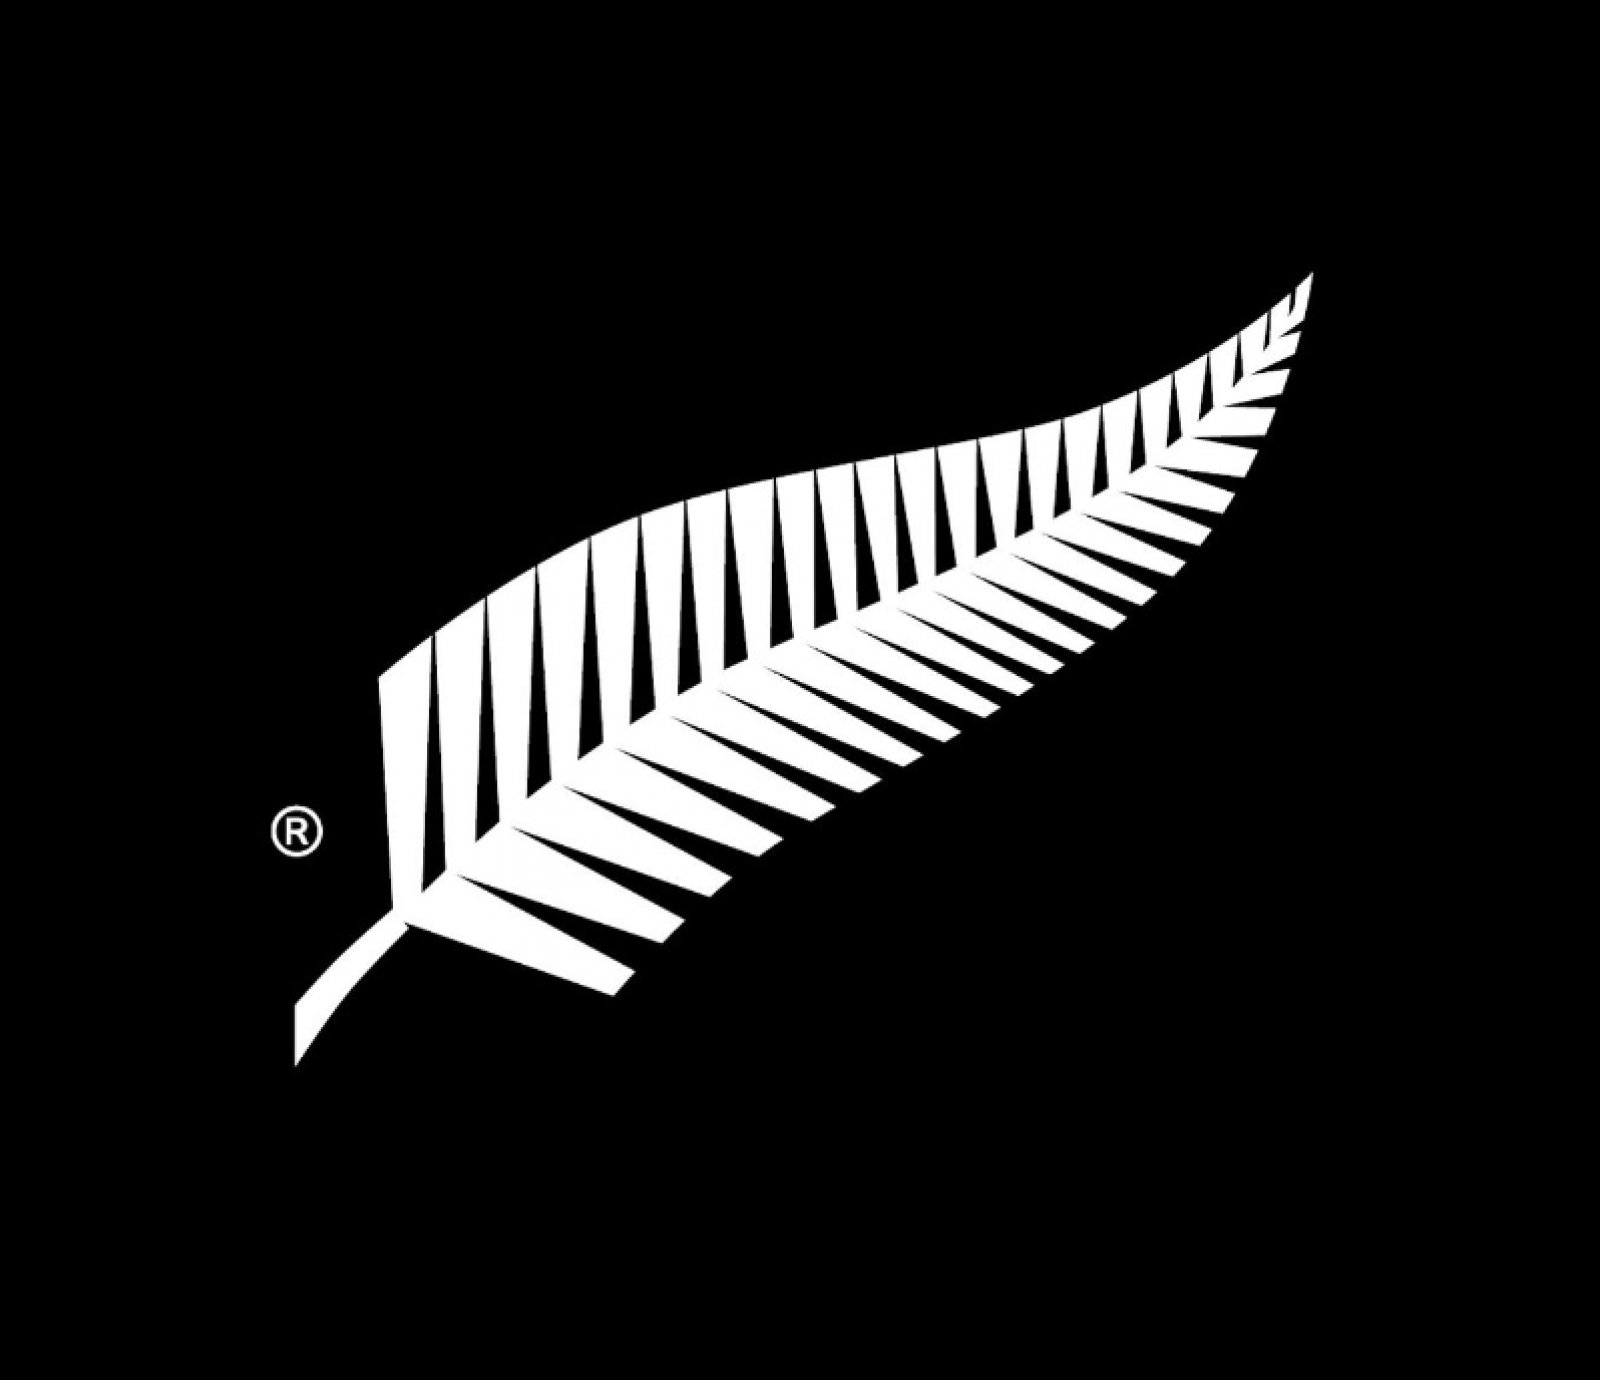 Blackcaps - New Zealand national cricket team